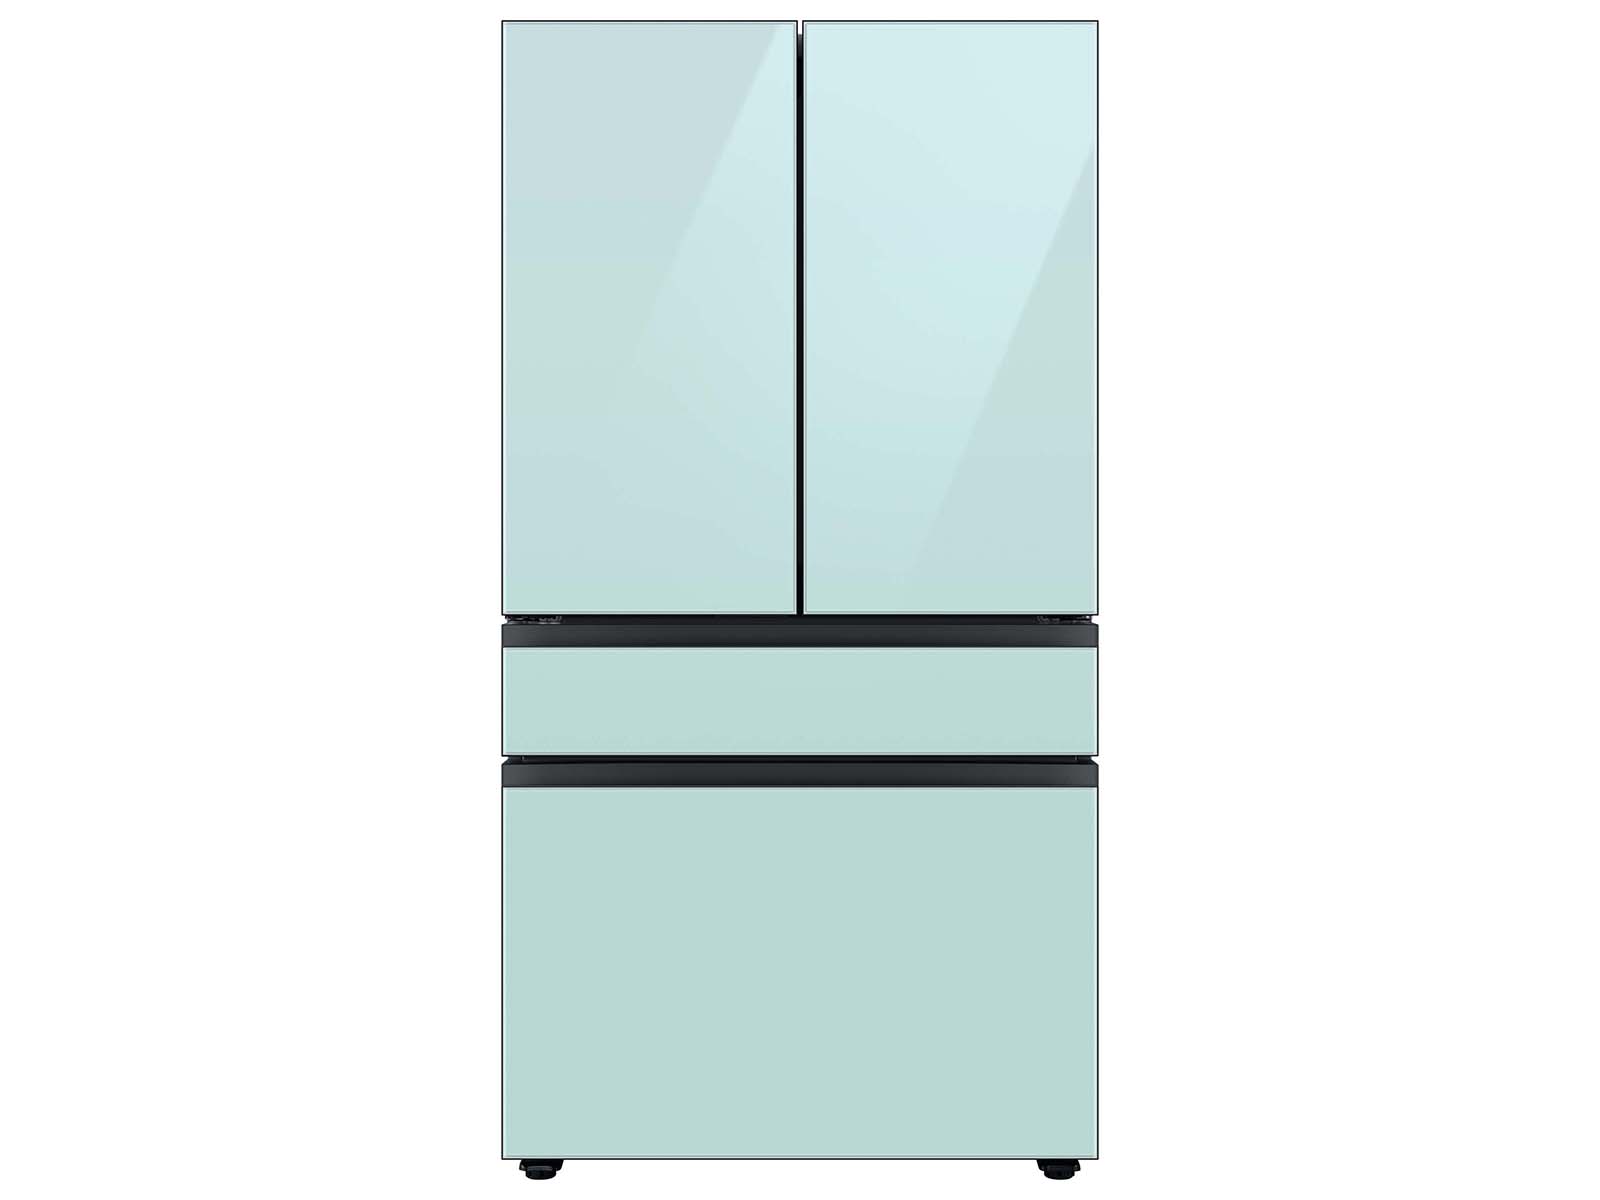 Bespoke 4-Door French Door Refrigerator (23 cu. ft.) with Customizable Door Panel Colors and Beverage Center™ in Morning Blue Glass